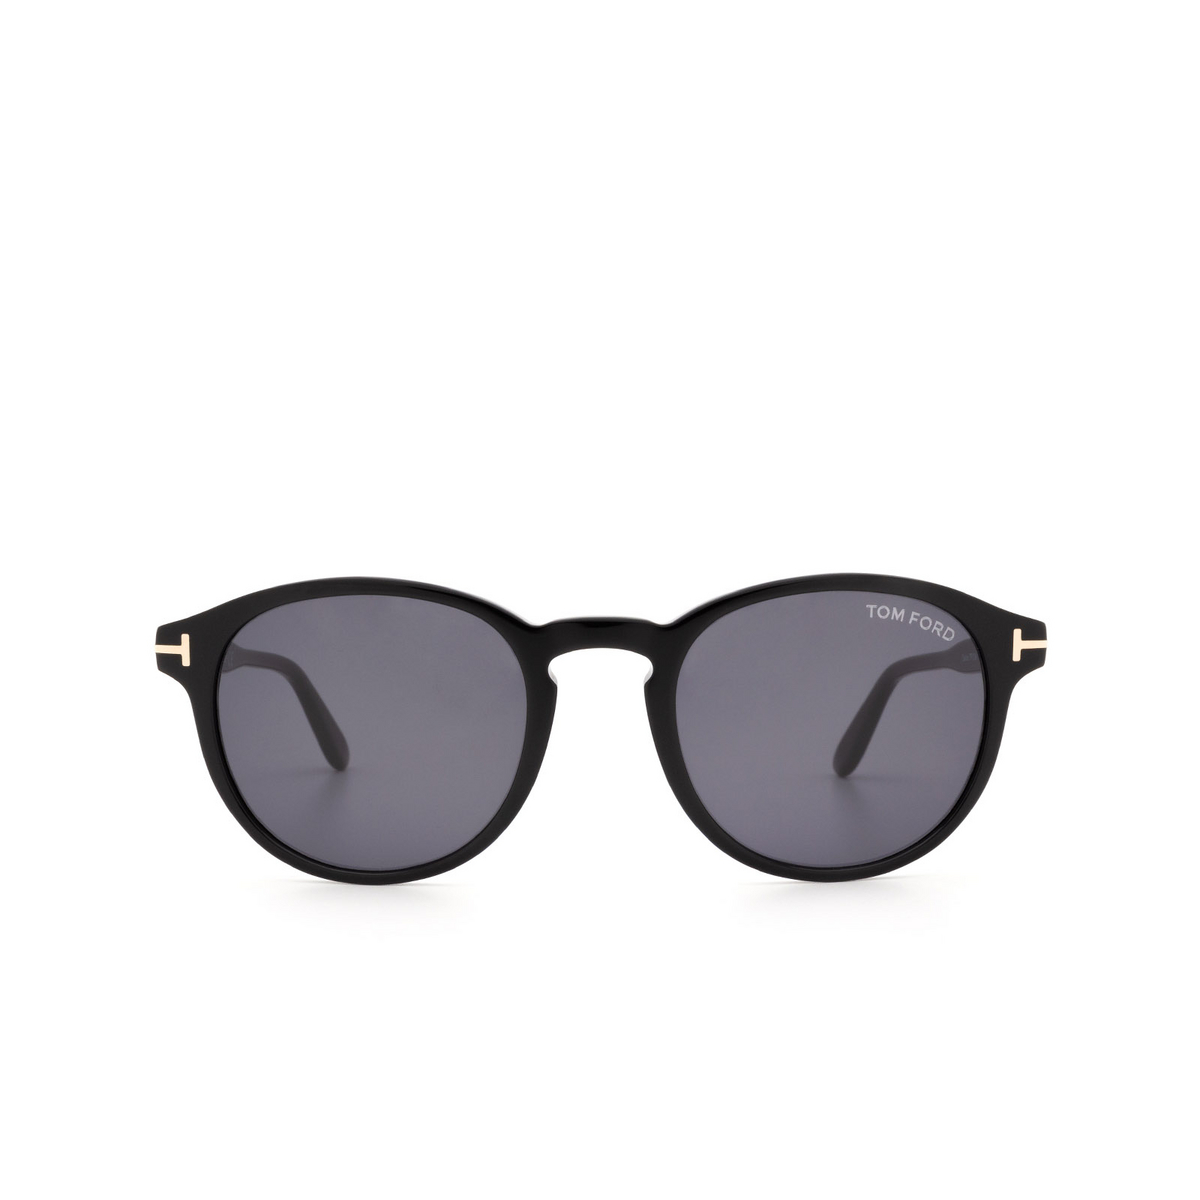 Tom Ford DANTE Sunglasses 01A Shiny Black - front view